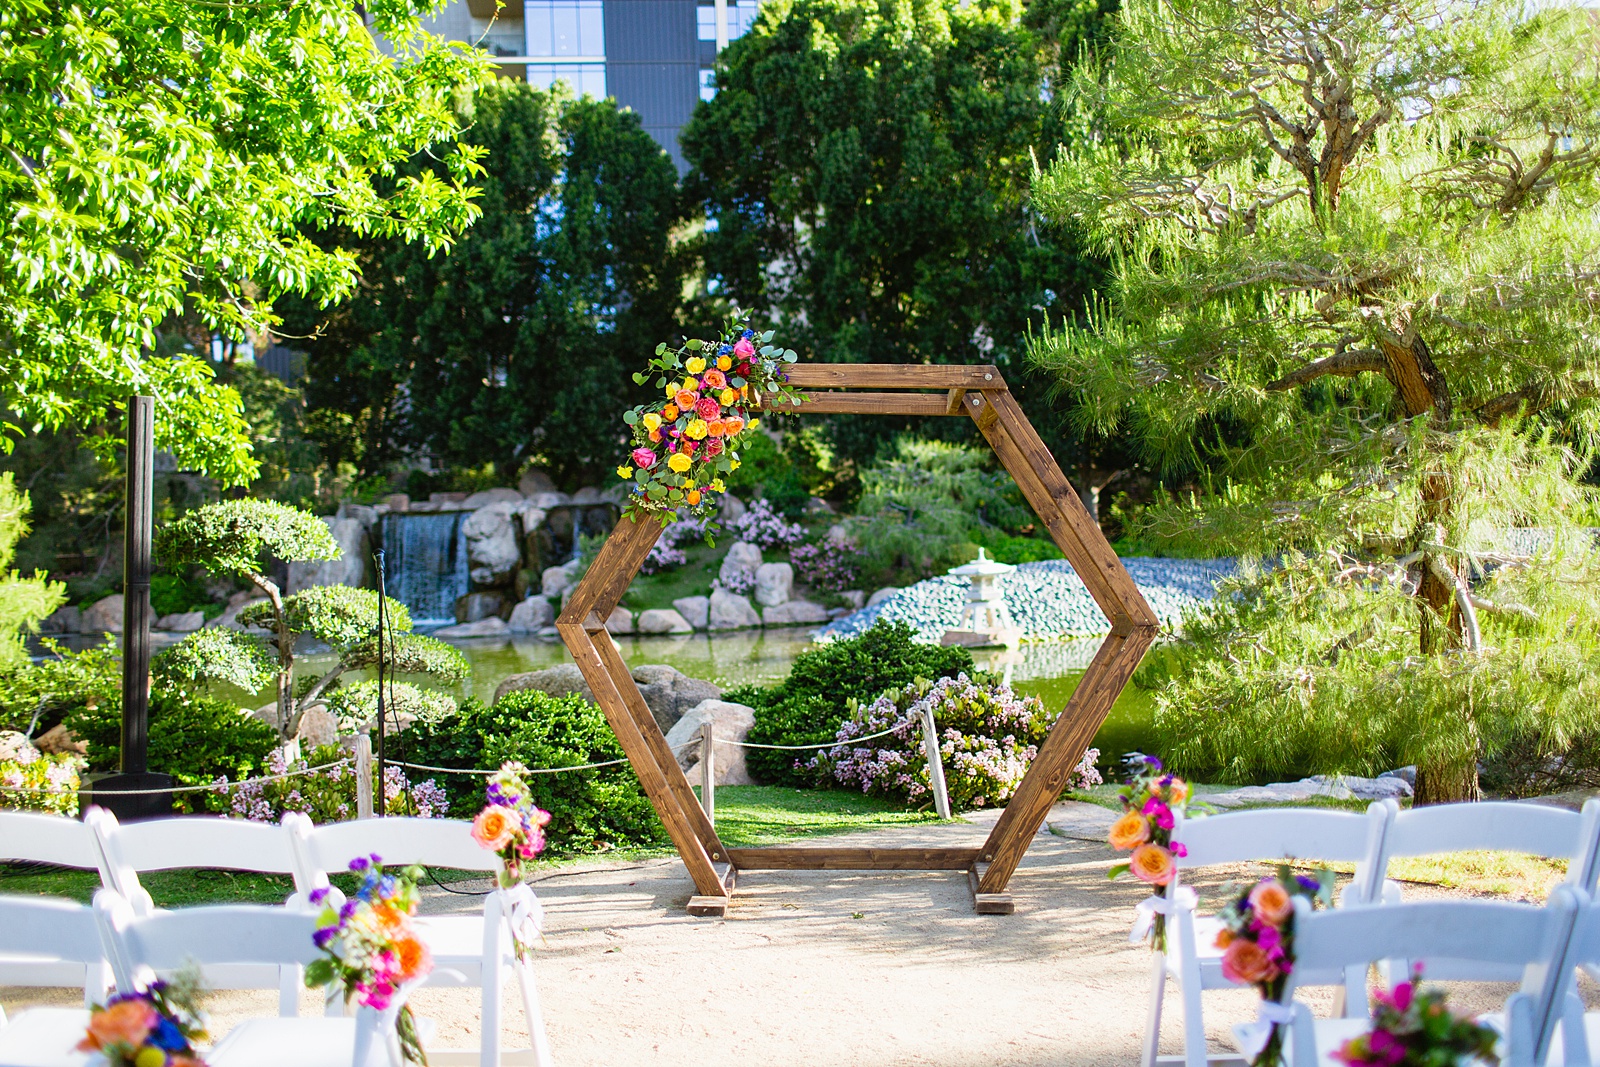 Wedding ceremony at Japanese Friendship Garden by Phoenix wedding photographer PMA Photography.